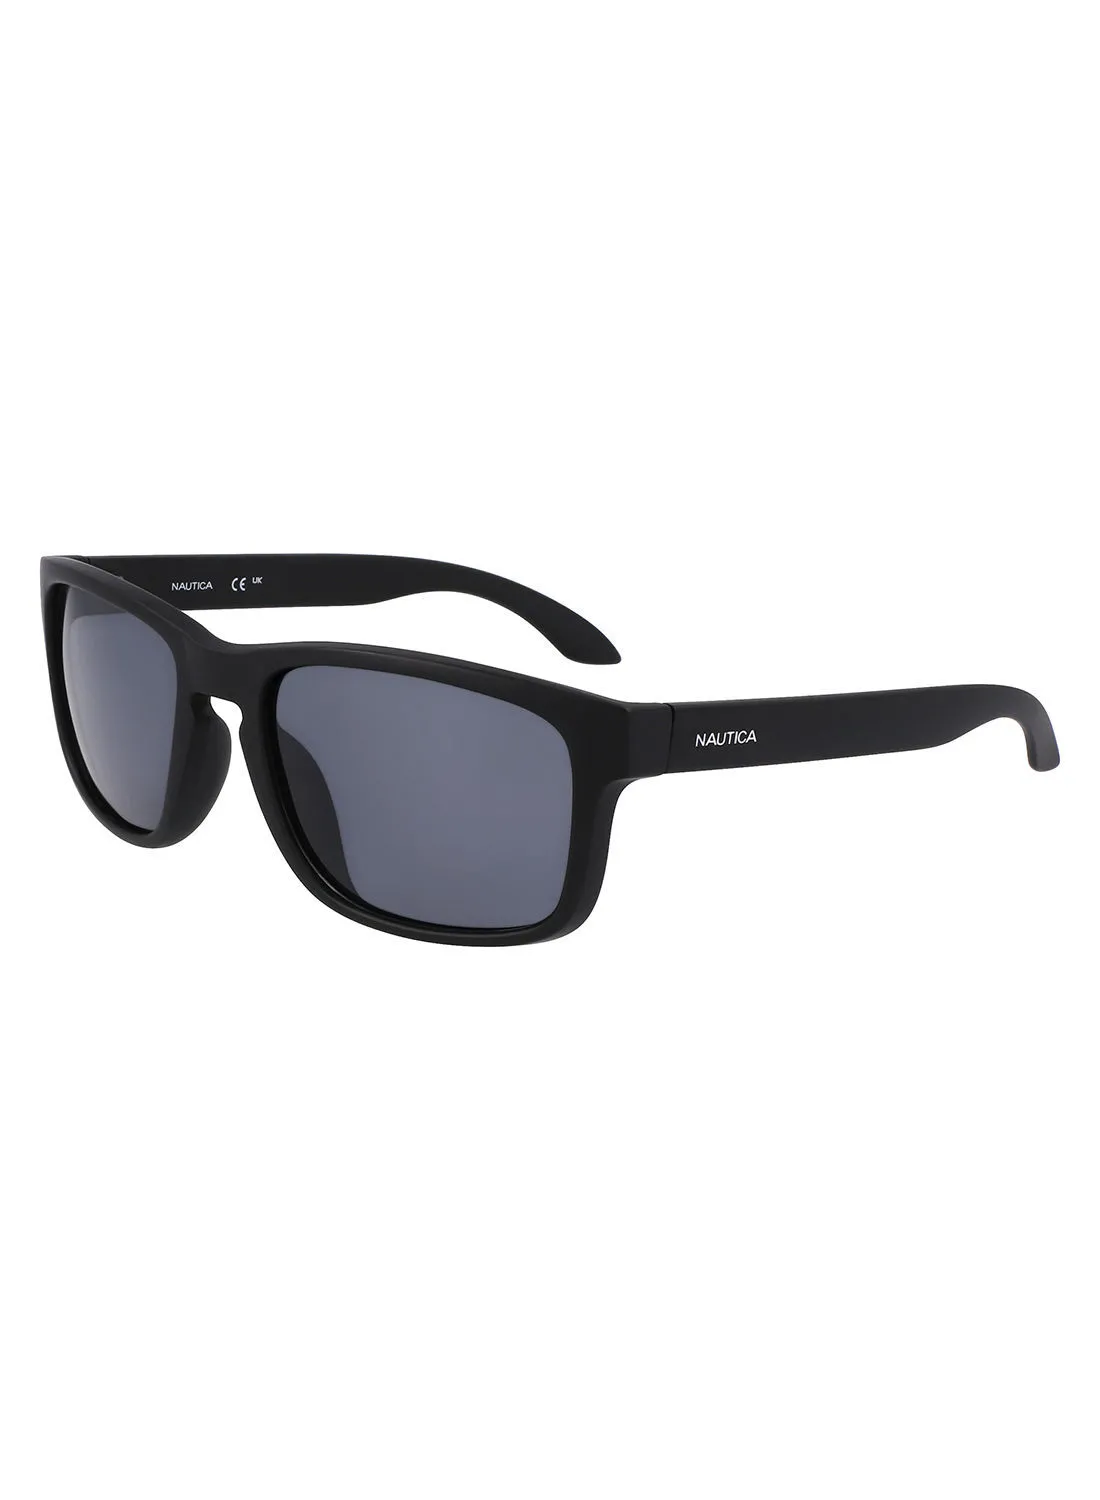 NAUTICA Men's Rectangular Sunglasses - N2247S-005-5719 - Lens Size: 57 Mm